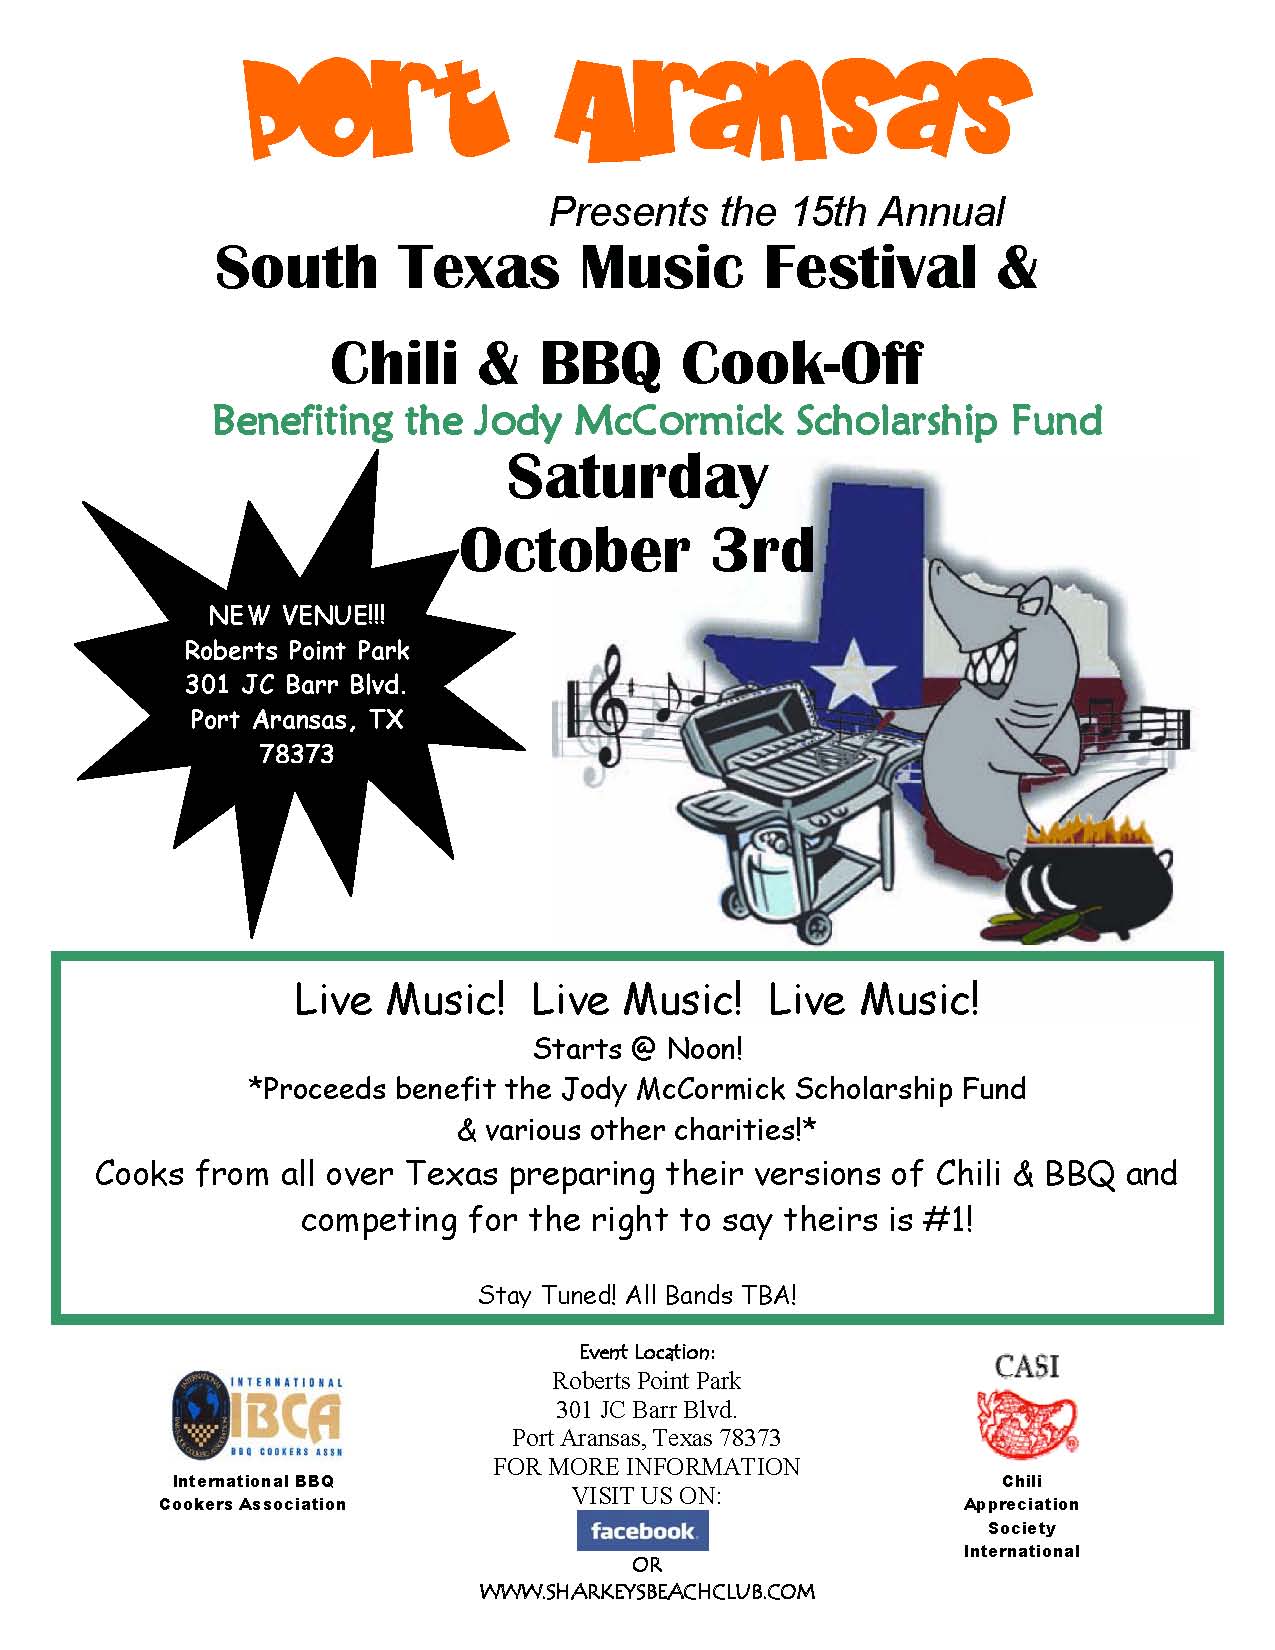 South Texas Music Festival October 3rd, 2015 ! Port Aransas, Texas.